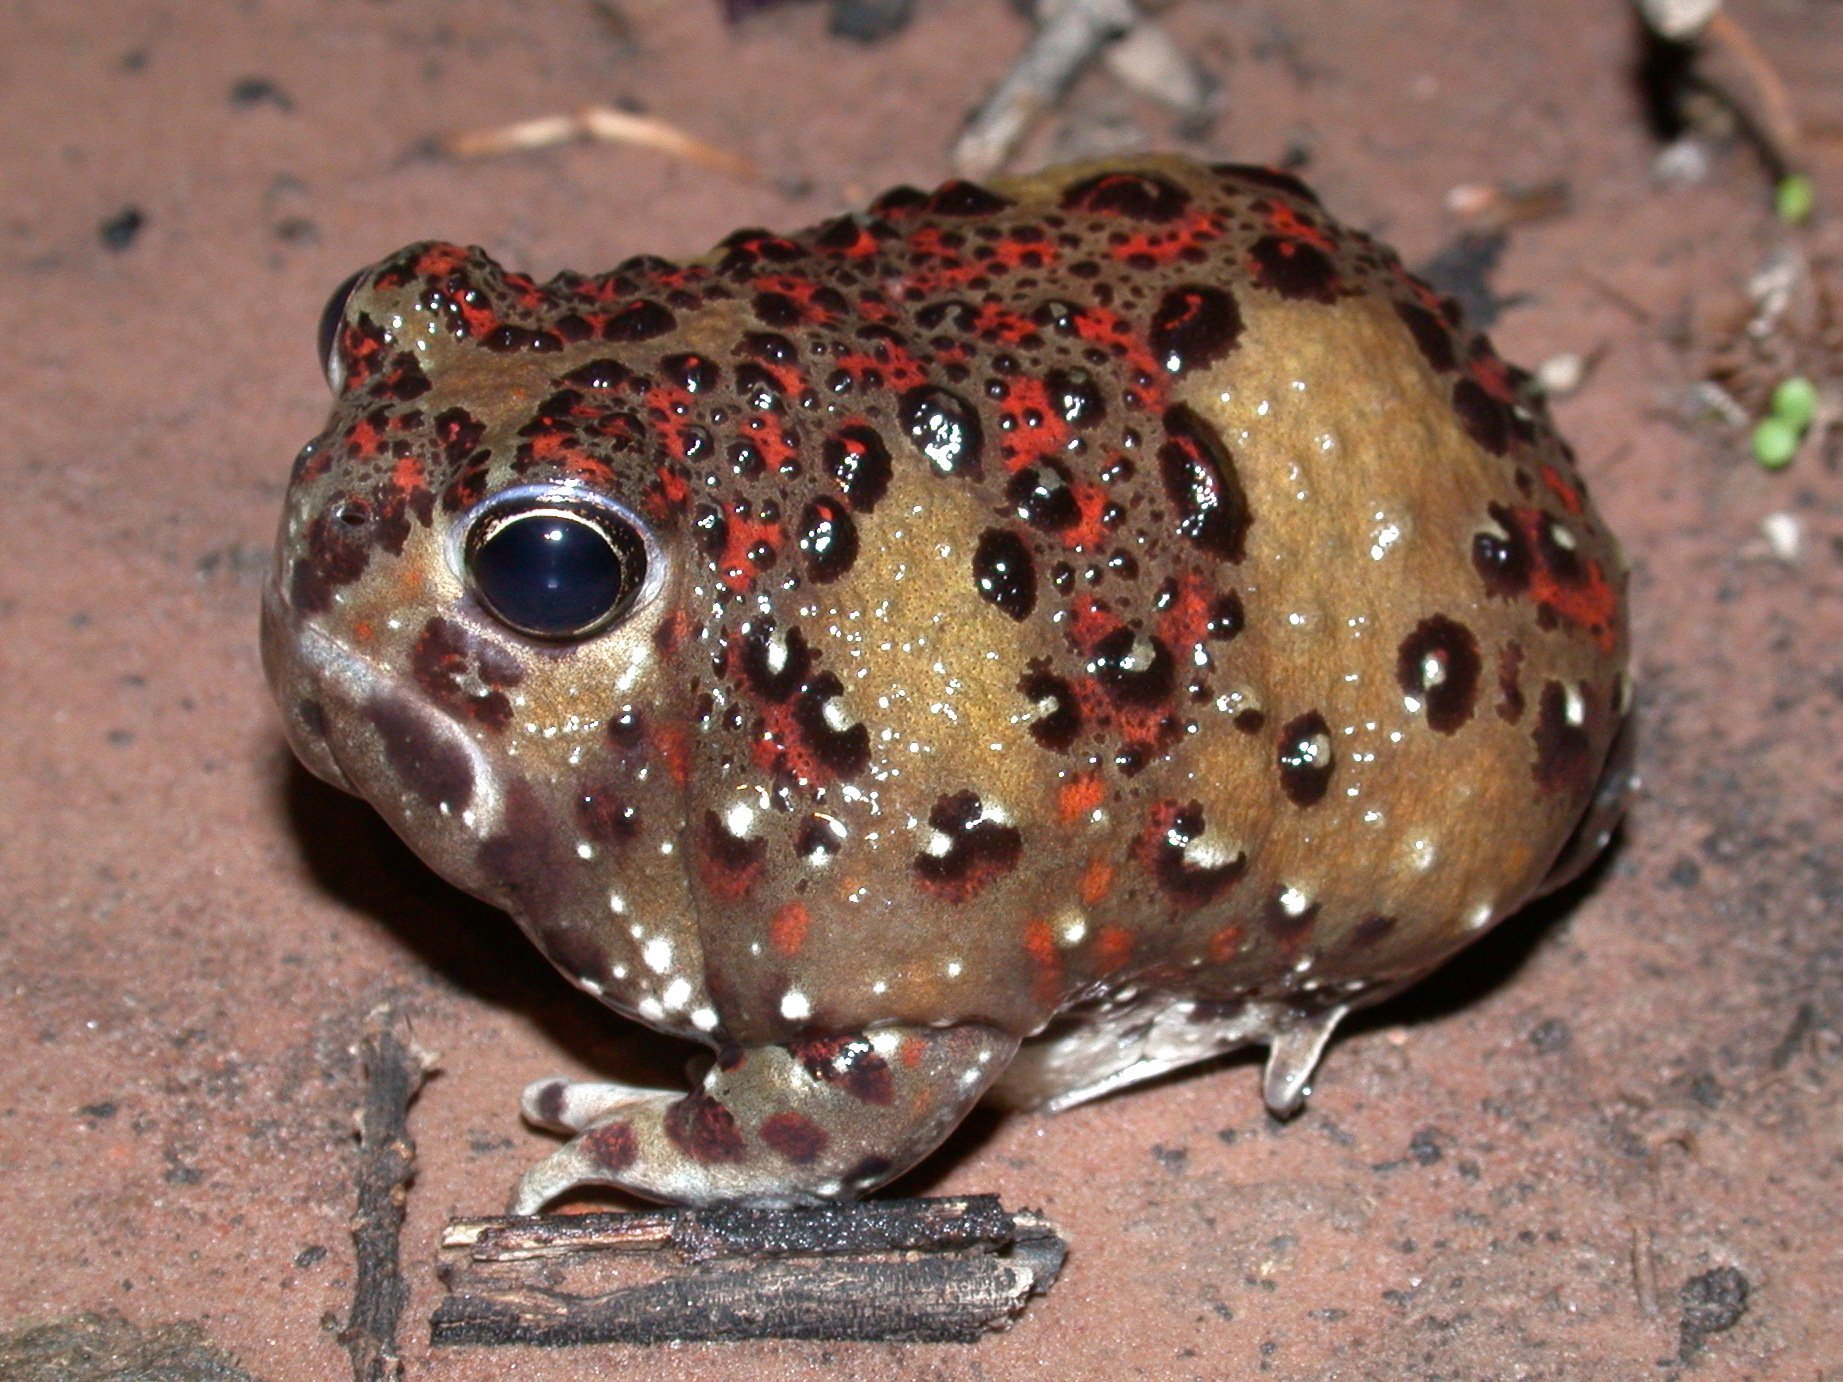 Meet Australia's desert-dwelling frogs - Australian Geographic